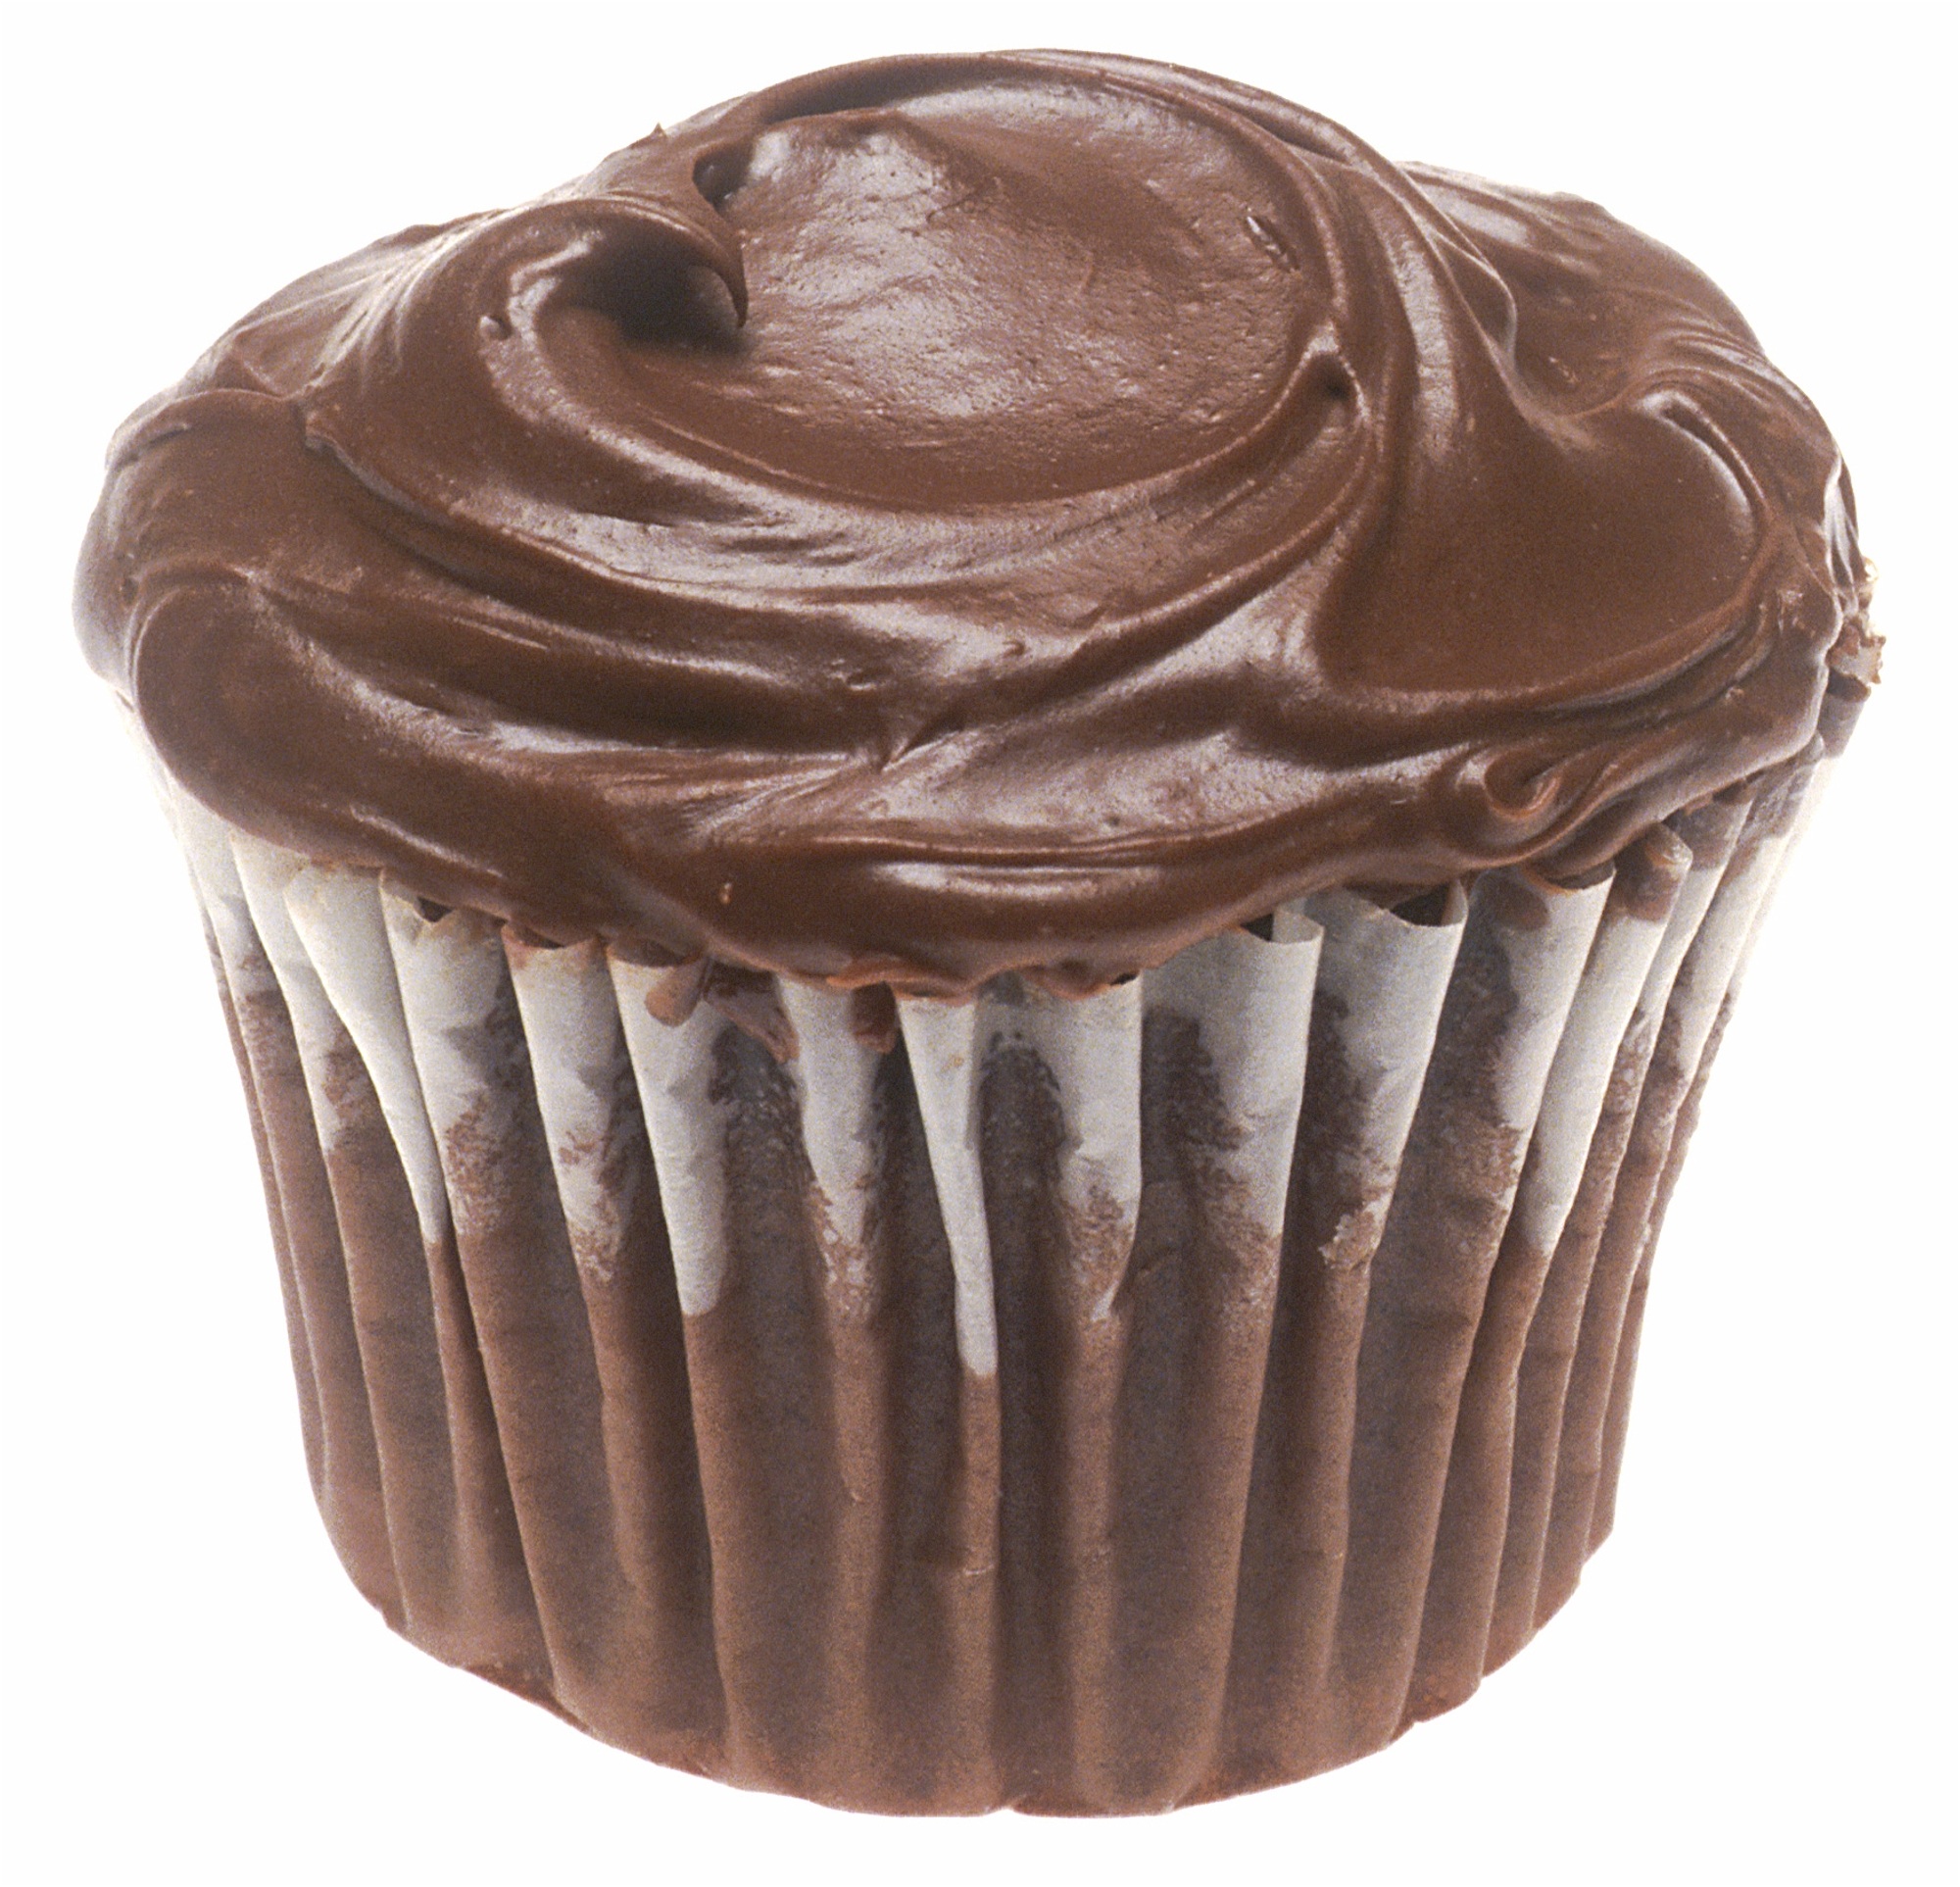 Chocolate cupcake photo